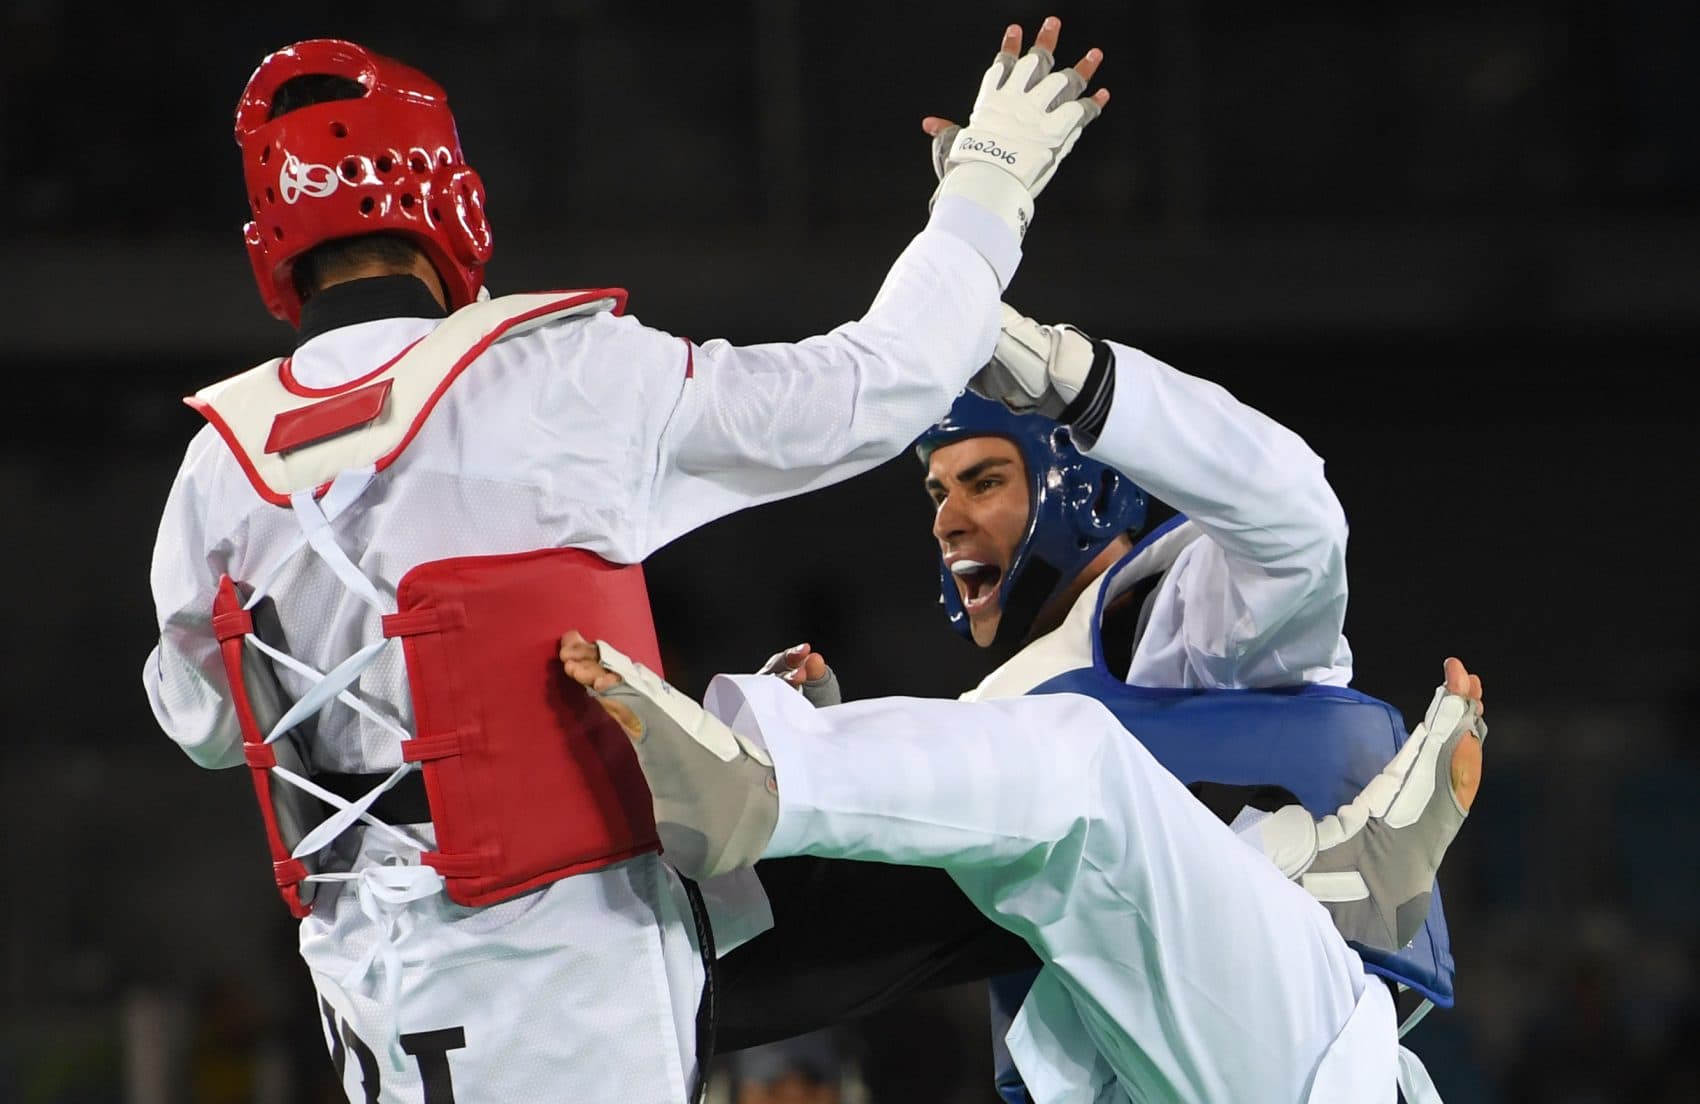 Tonga's Pita Taufatofua (right) competes against Iran's Sajjad Mardani during their men's taekwondo qualifying bout. (Kirill Kudryavtsev/AFP/Getty Images)